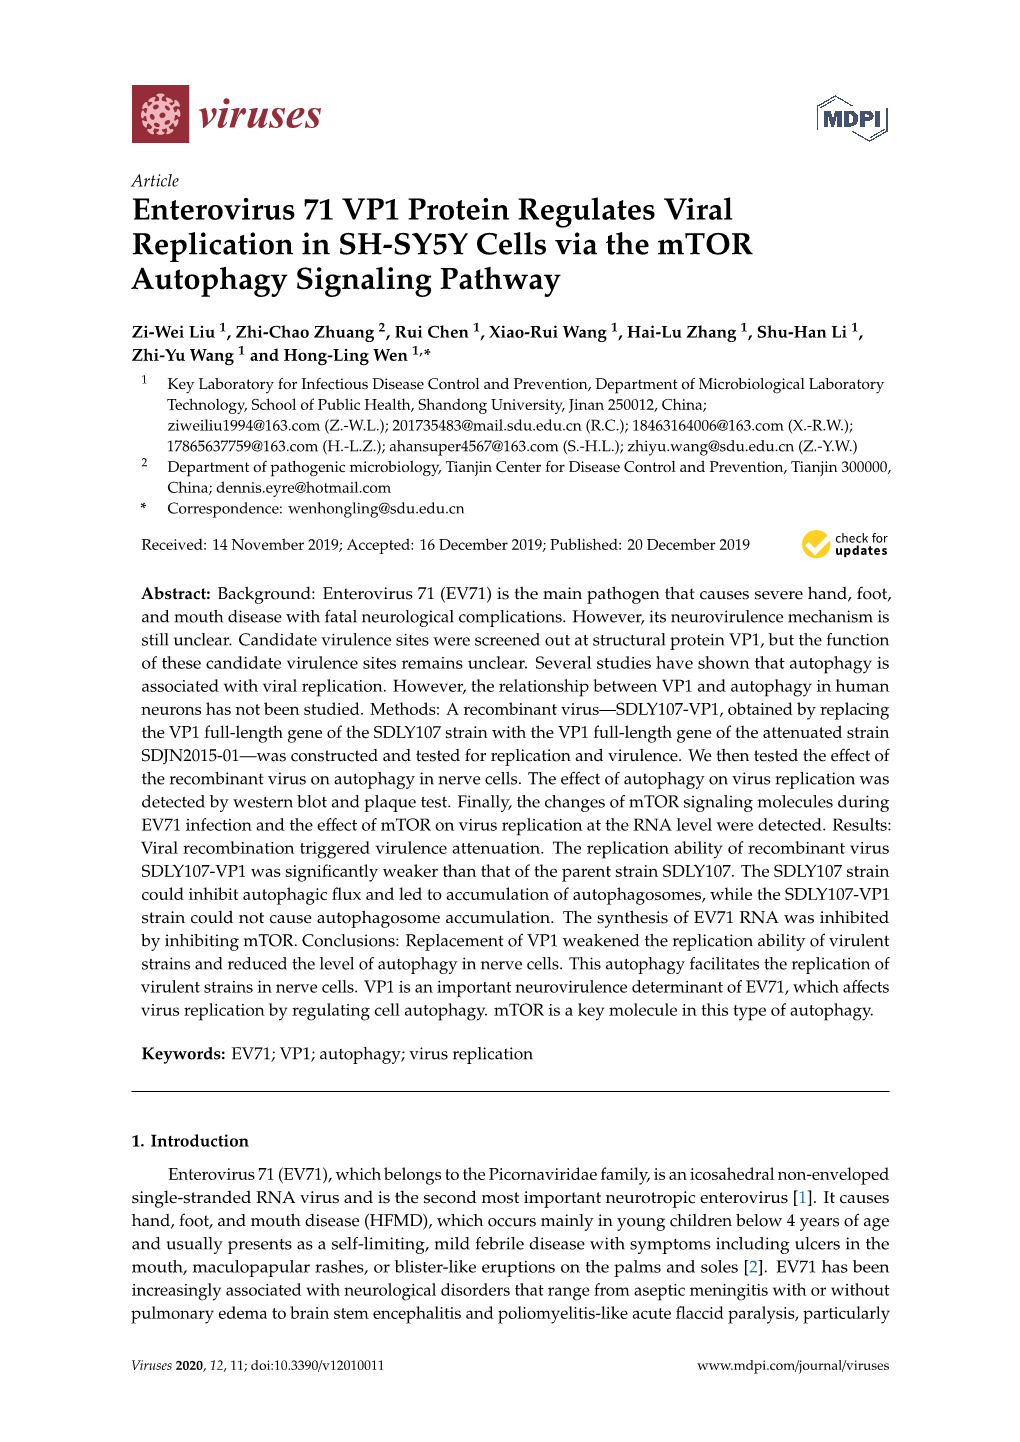 Enterovirus 71 VP1 Protein Regulates Viral Replication in SH-SY5Y Cells Via the Mtor Autophagy Signaling Pathway